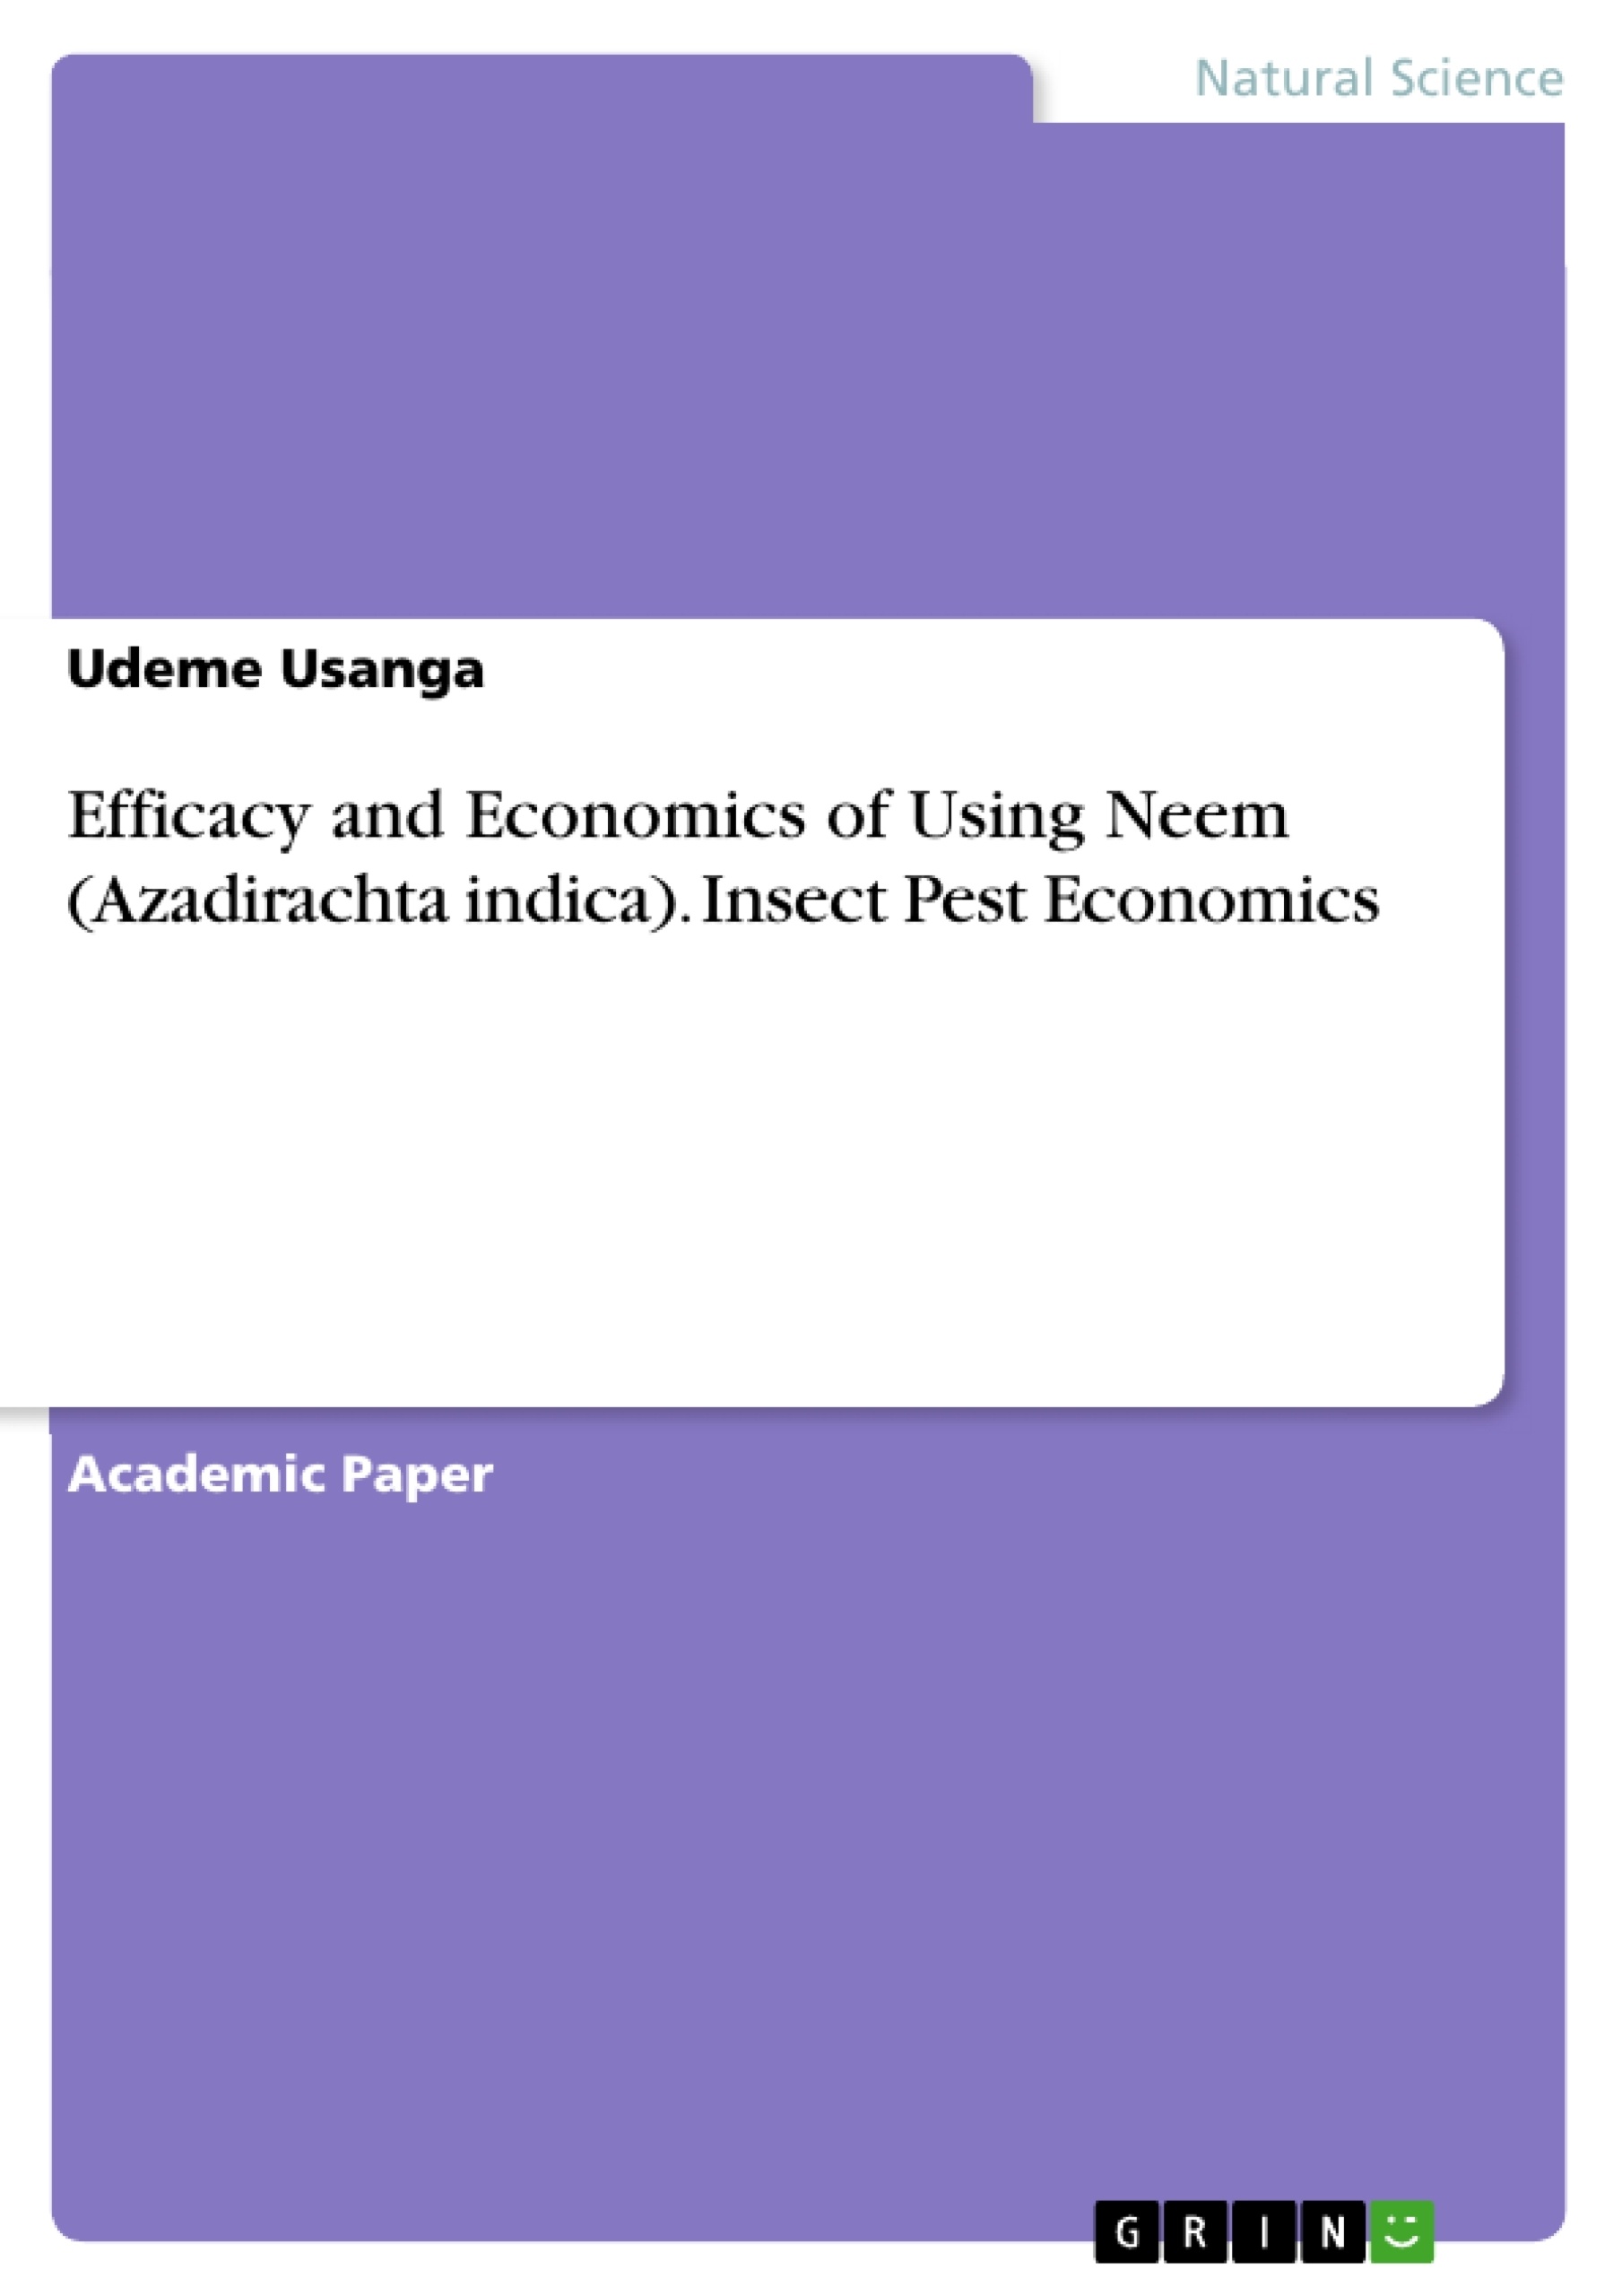 Title: Efficacy and Economics of Using Neem (Azadirachta indica). Insect Pest Economics